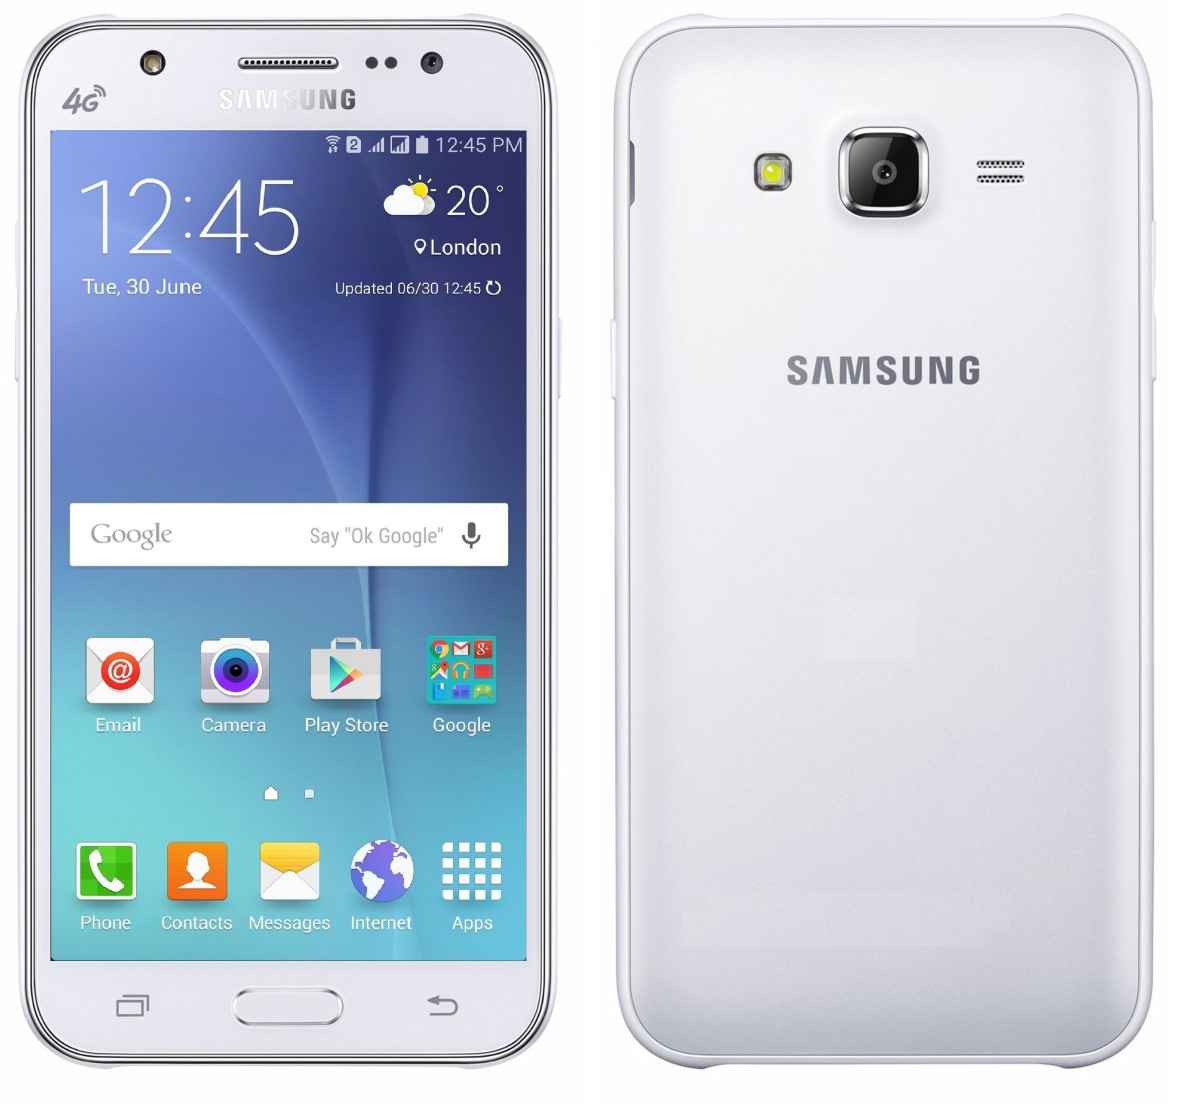 Samsung Galaxy J5 Mobile Phone best price in bd